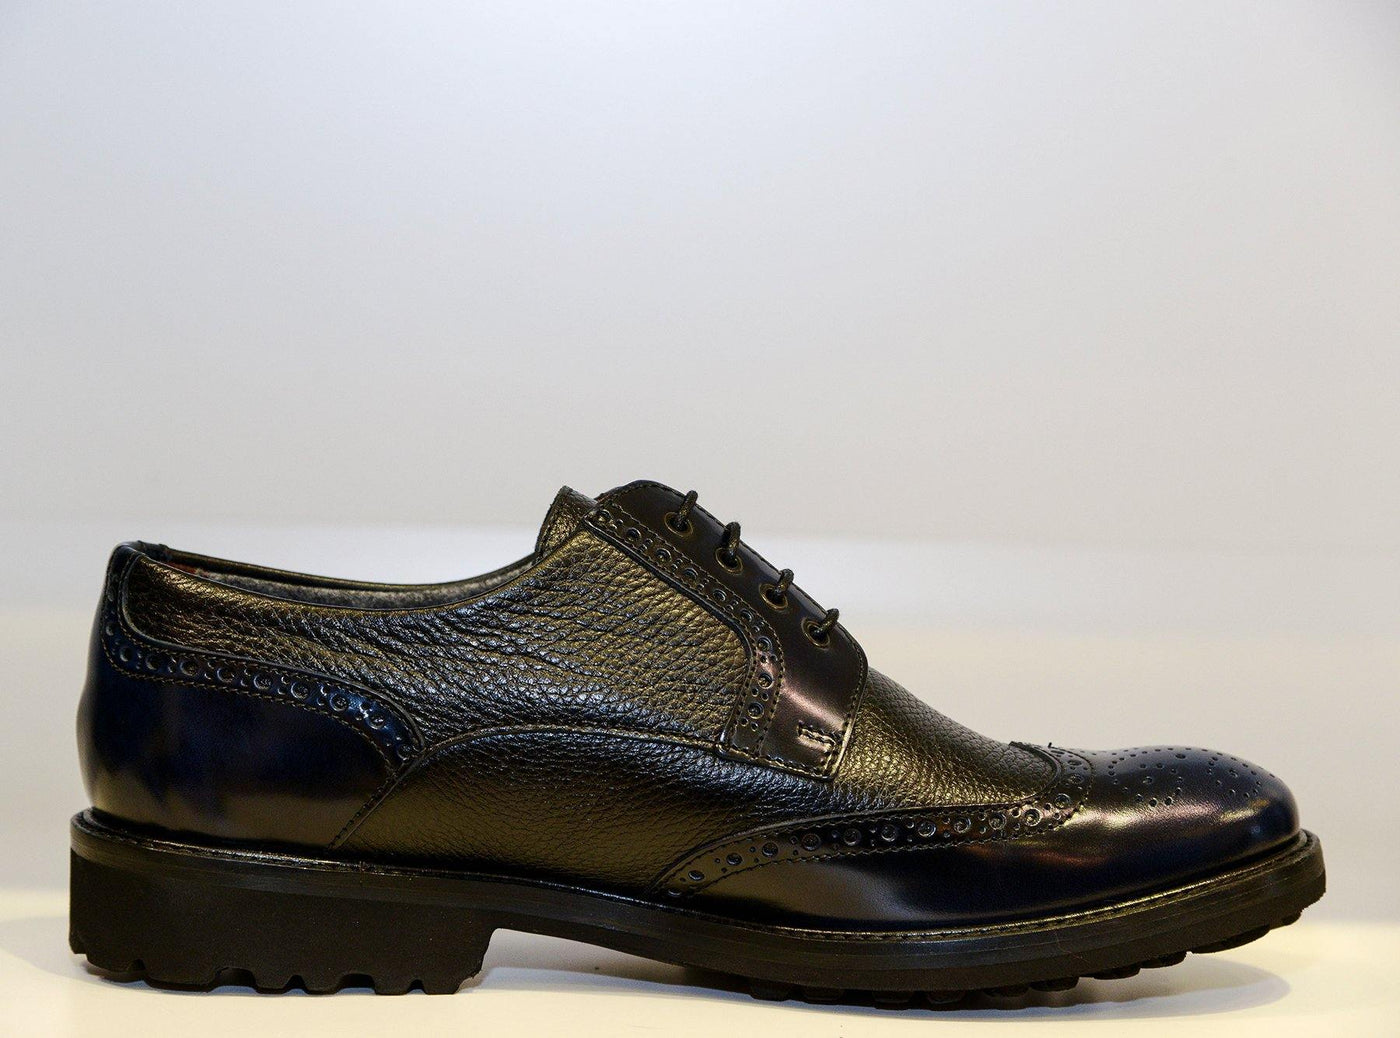 Corneliani scarpa derby - Chirico Store - 41, blu, Corneliani, scarpa uomo, Scarpe - Corneliani